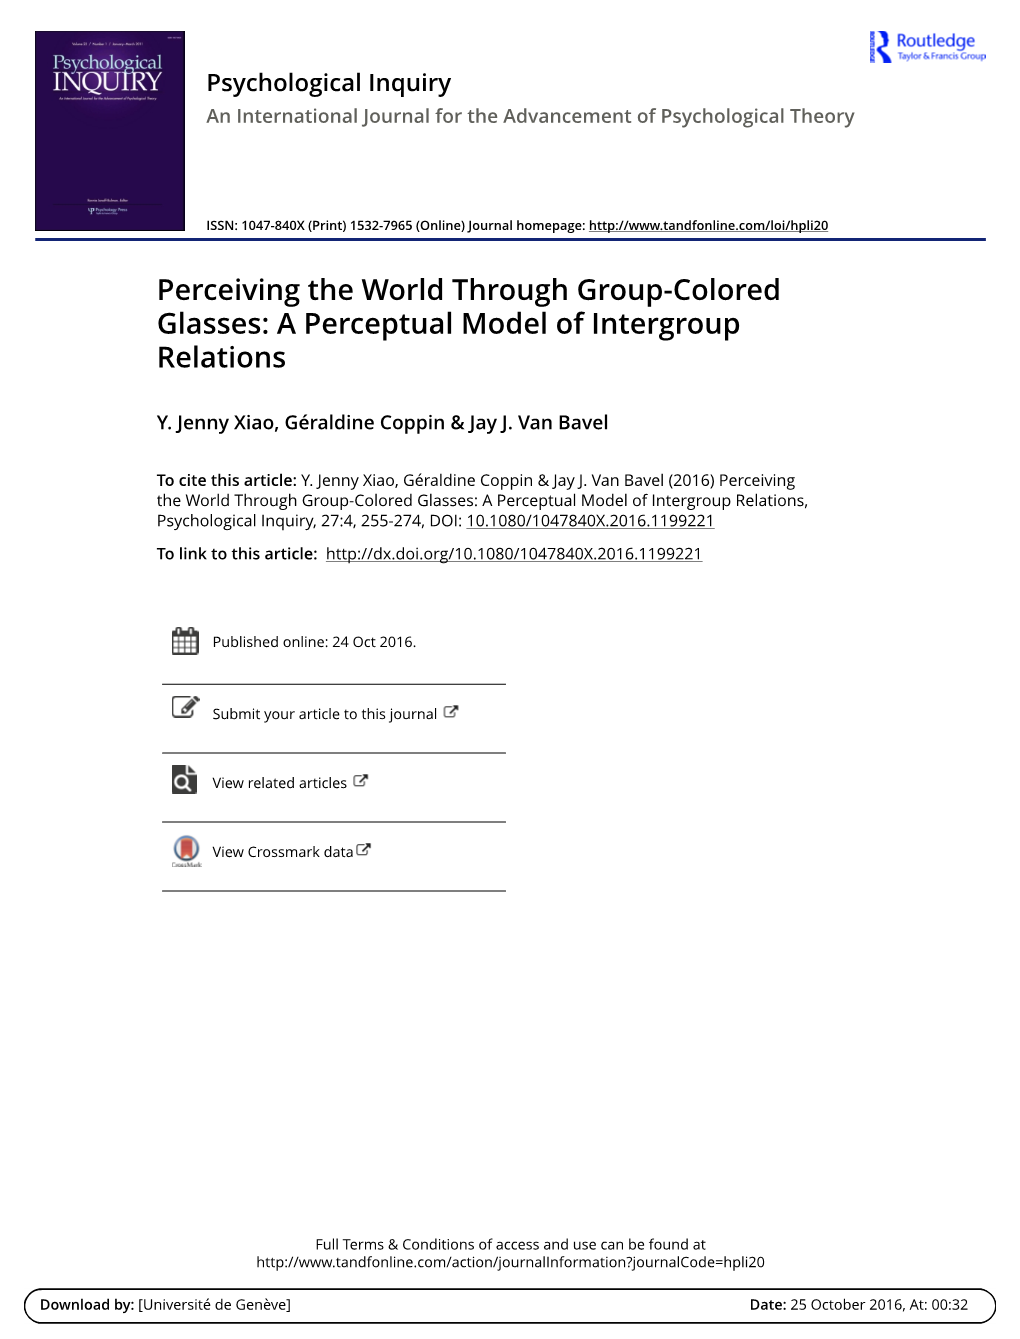 A Perceptual Model of Intergroup Relations